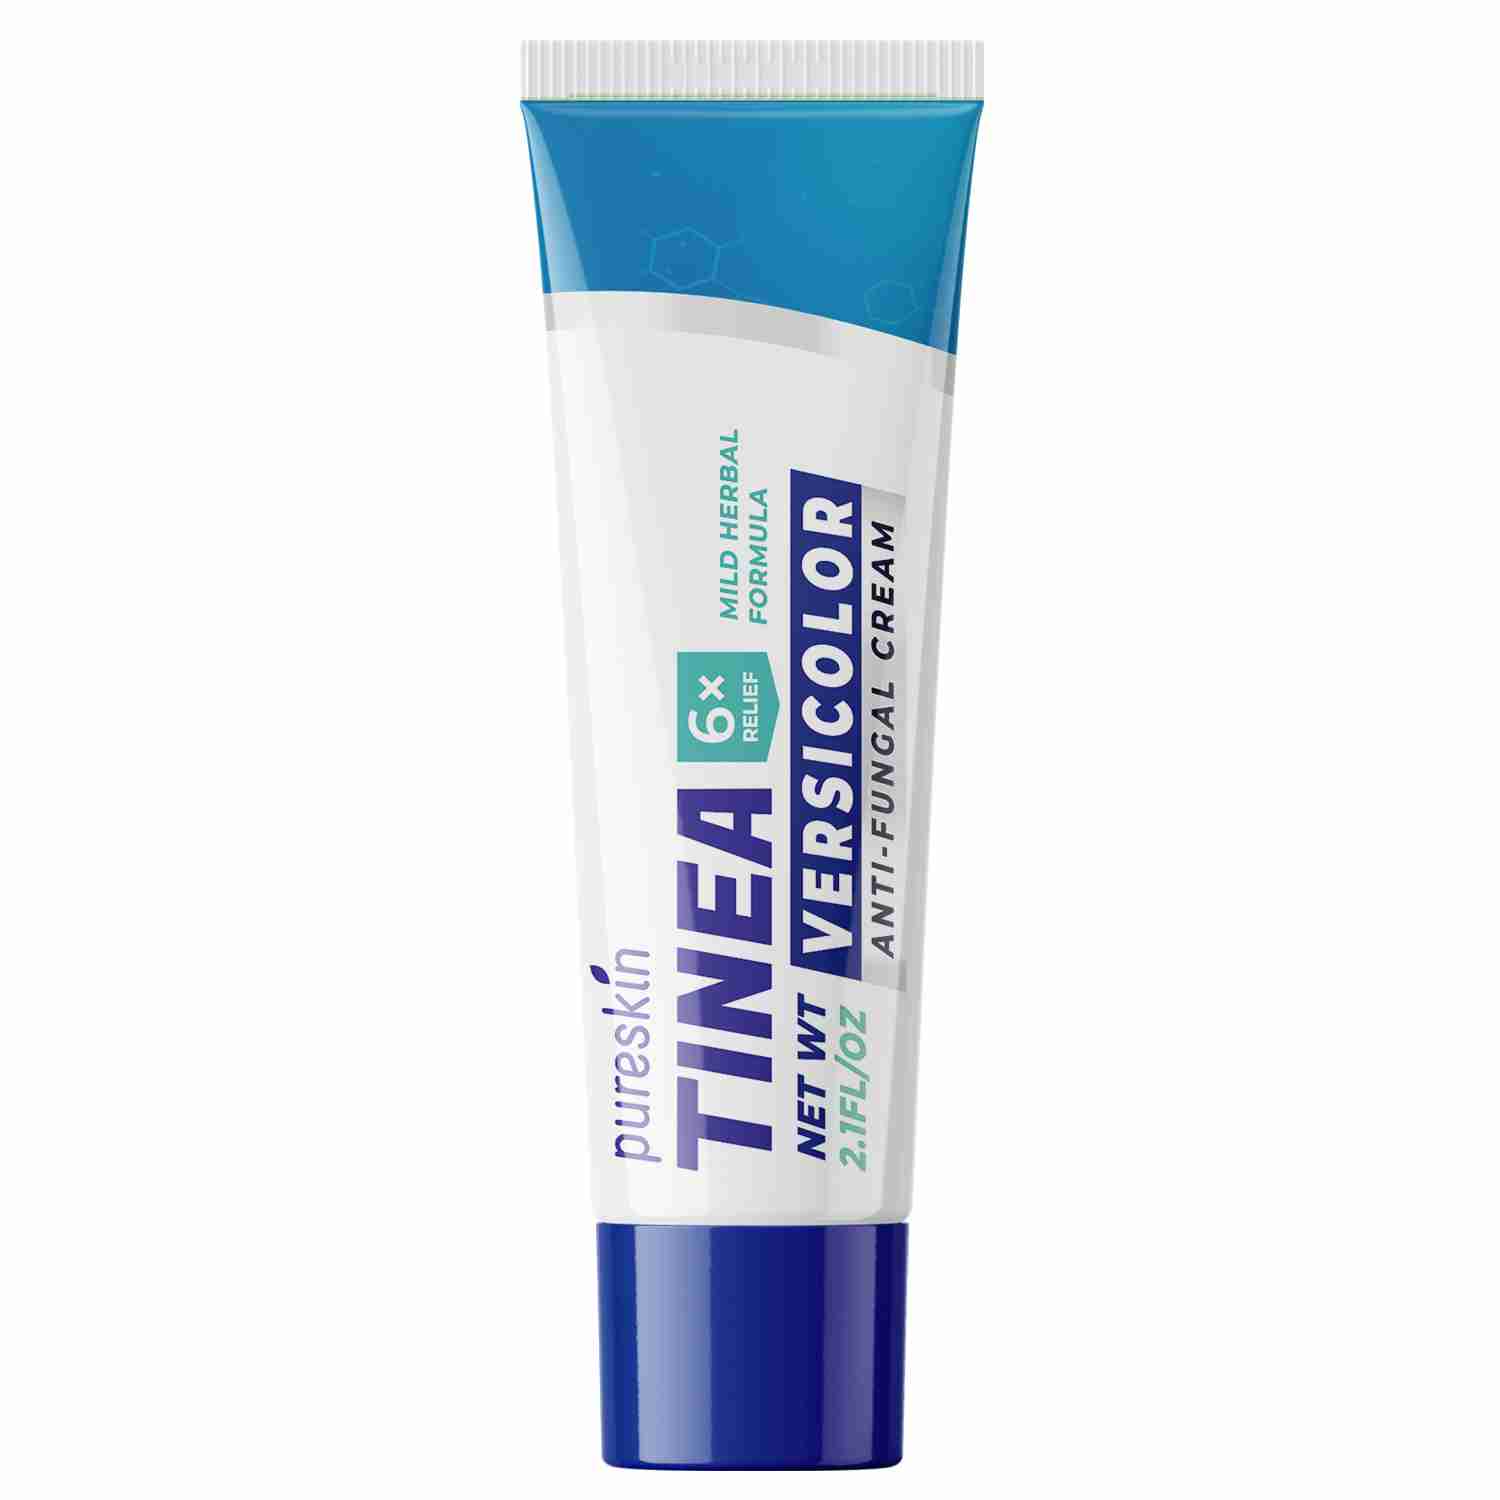 tinea-versicolor-treatment-cream with cash back rebate